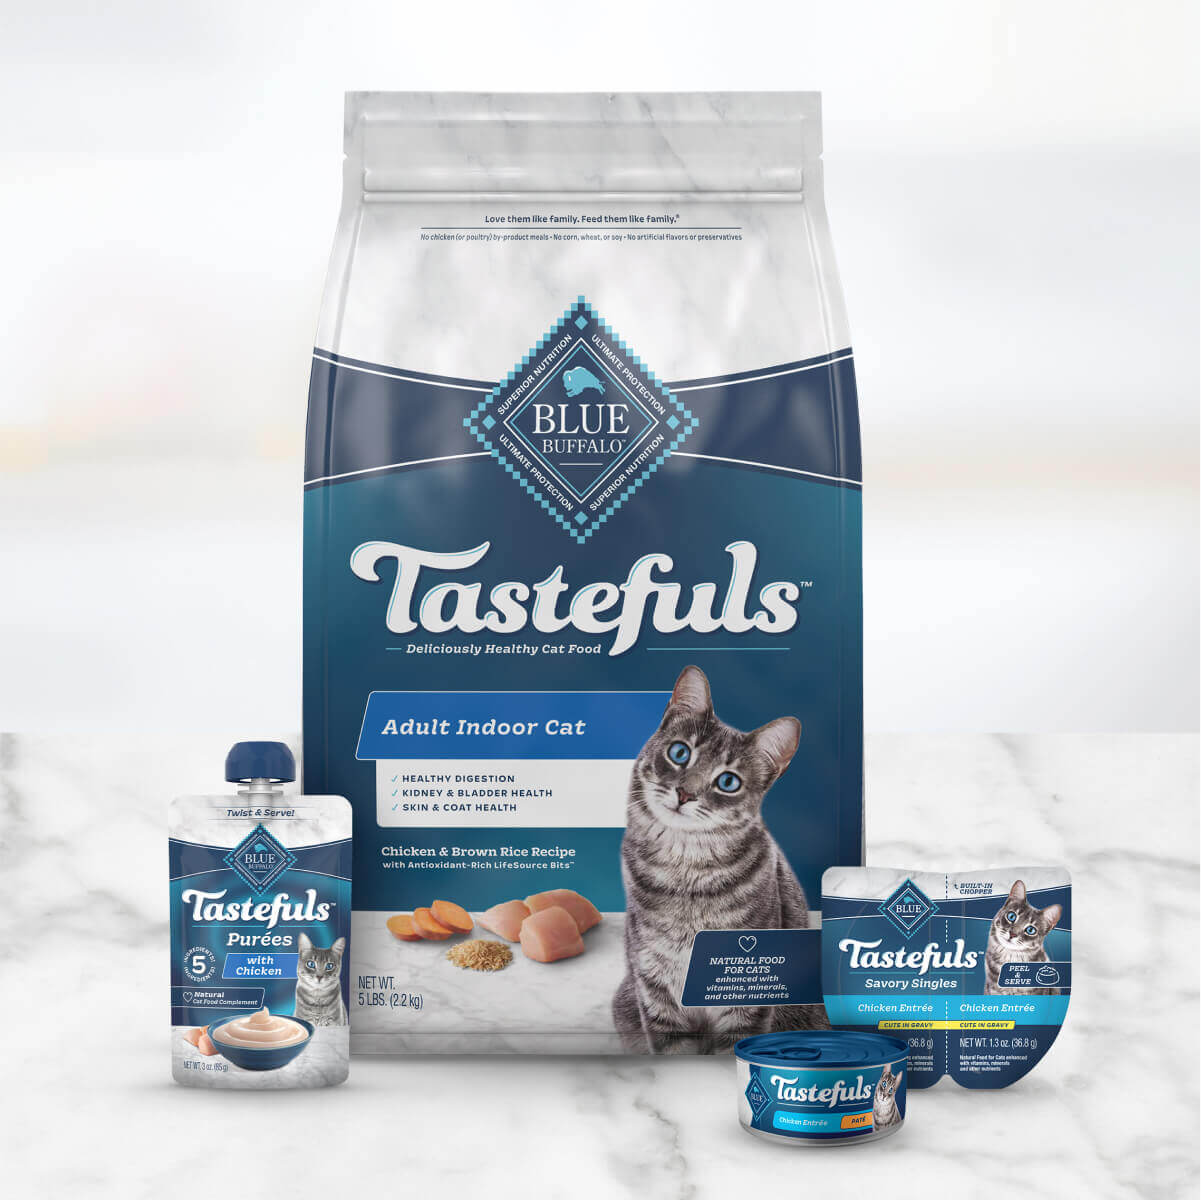 Blue cat tastefuls packages 